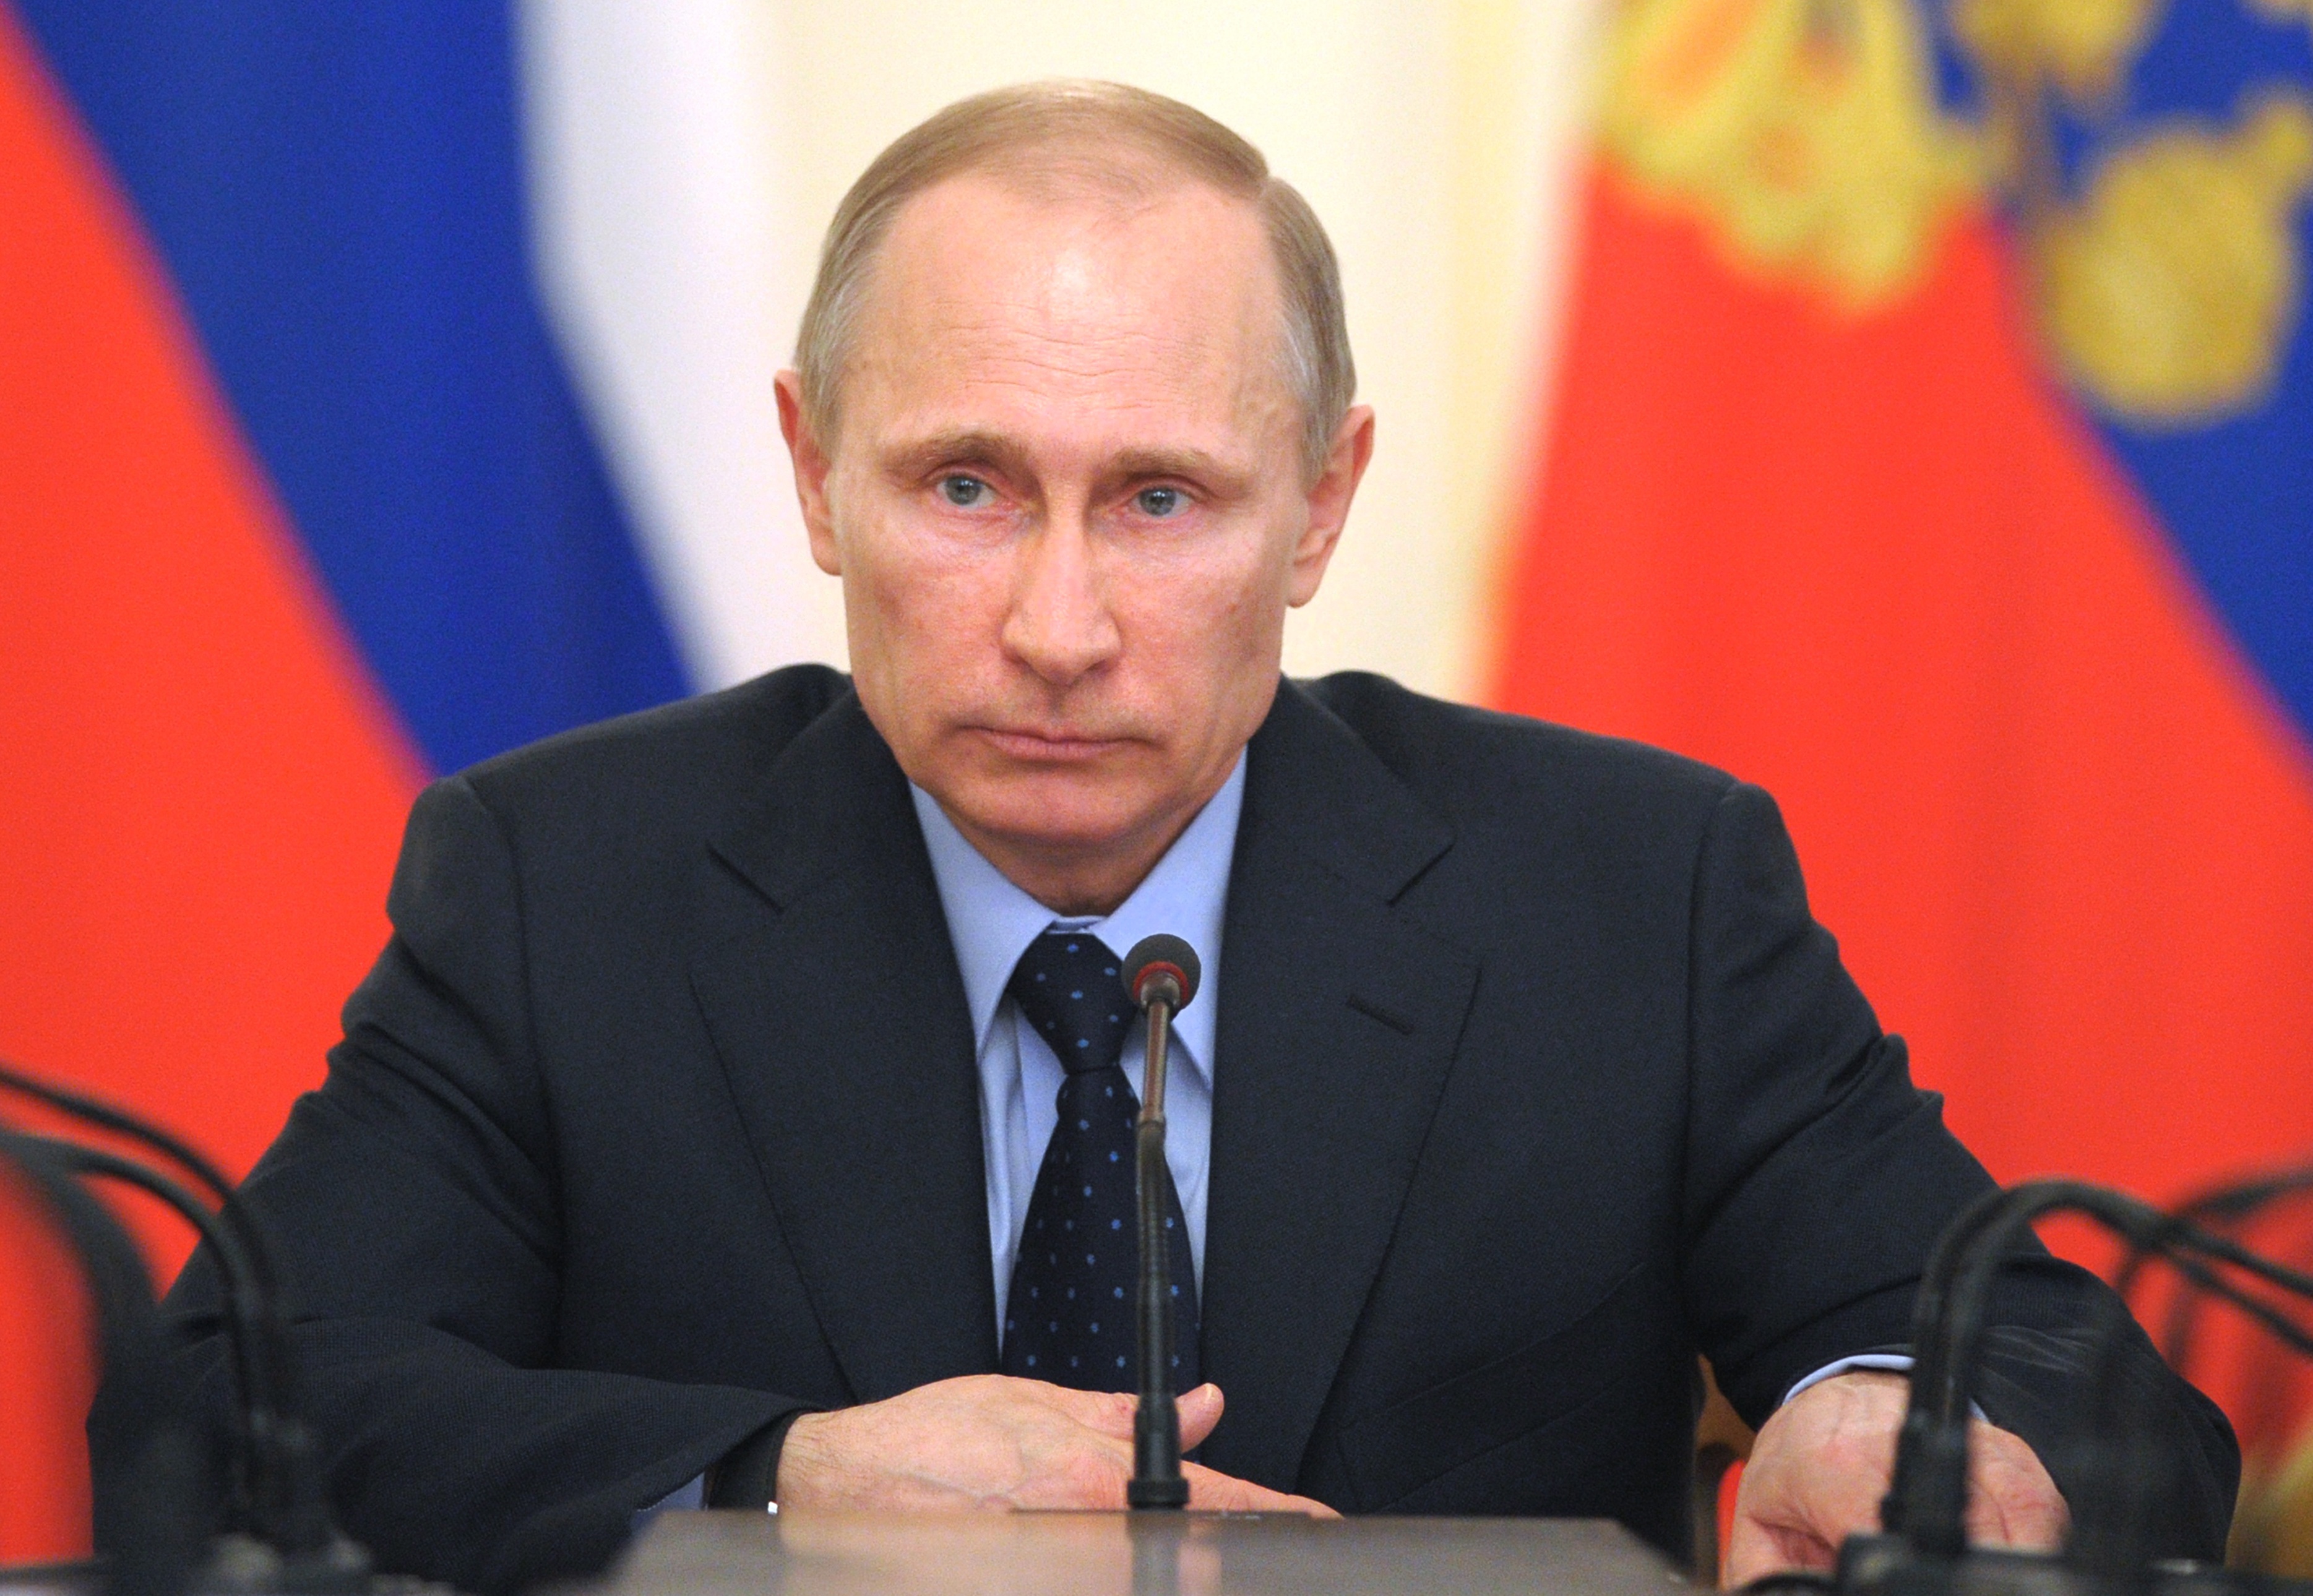 Putin dismisses head of administration